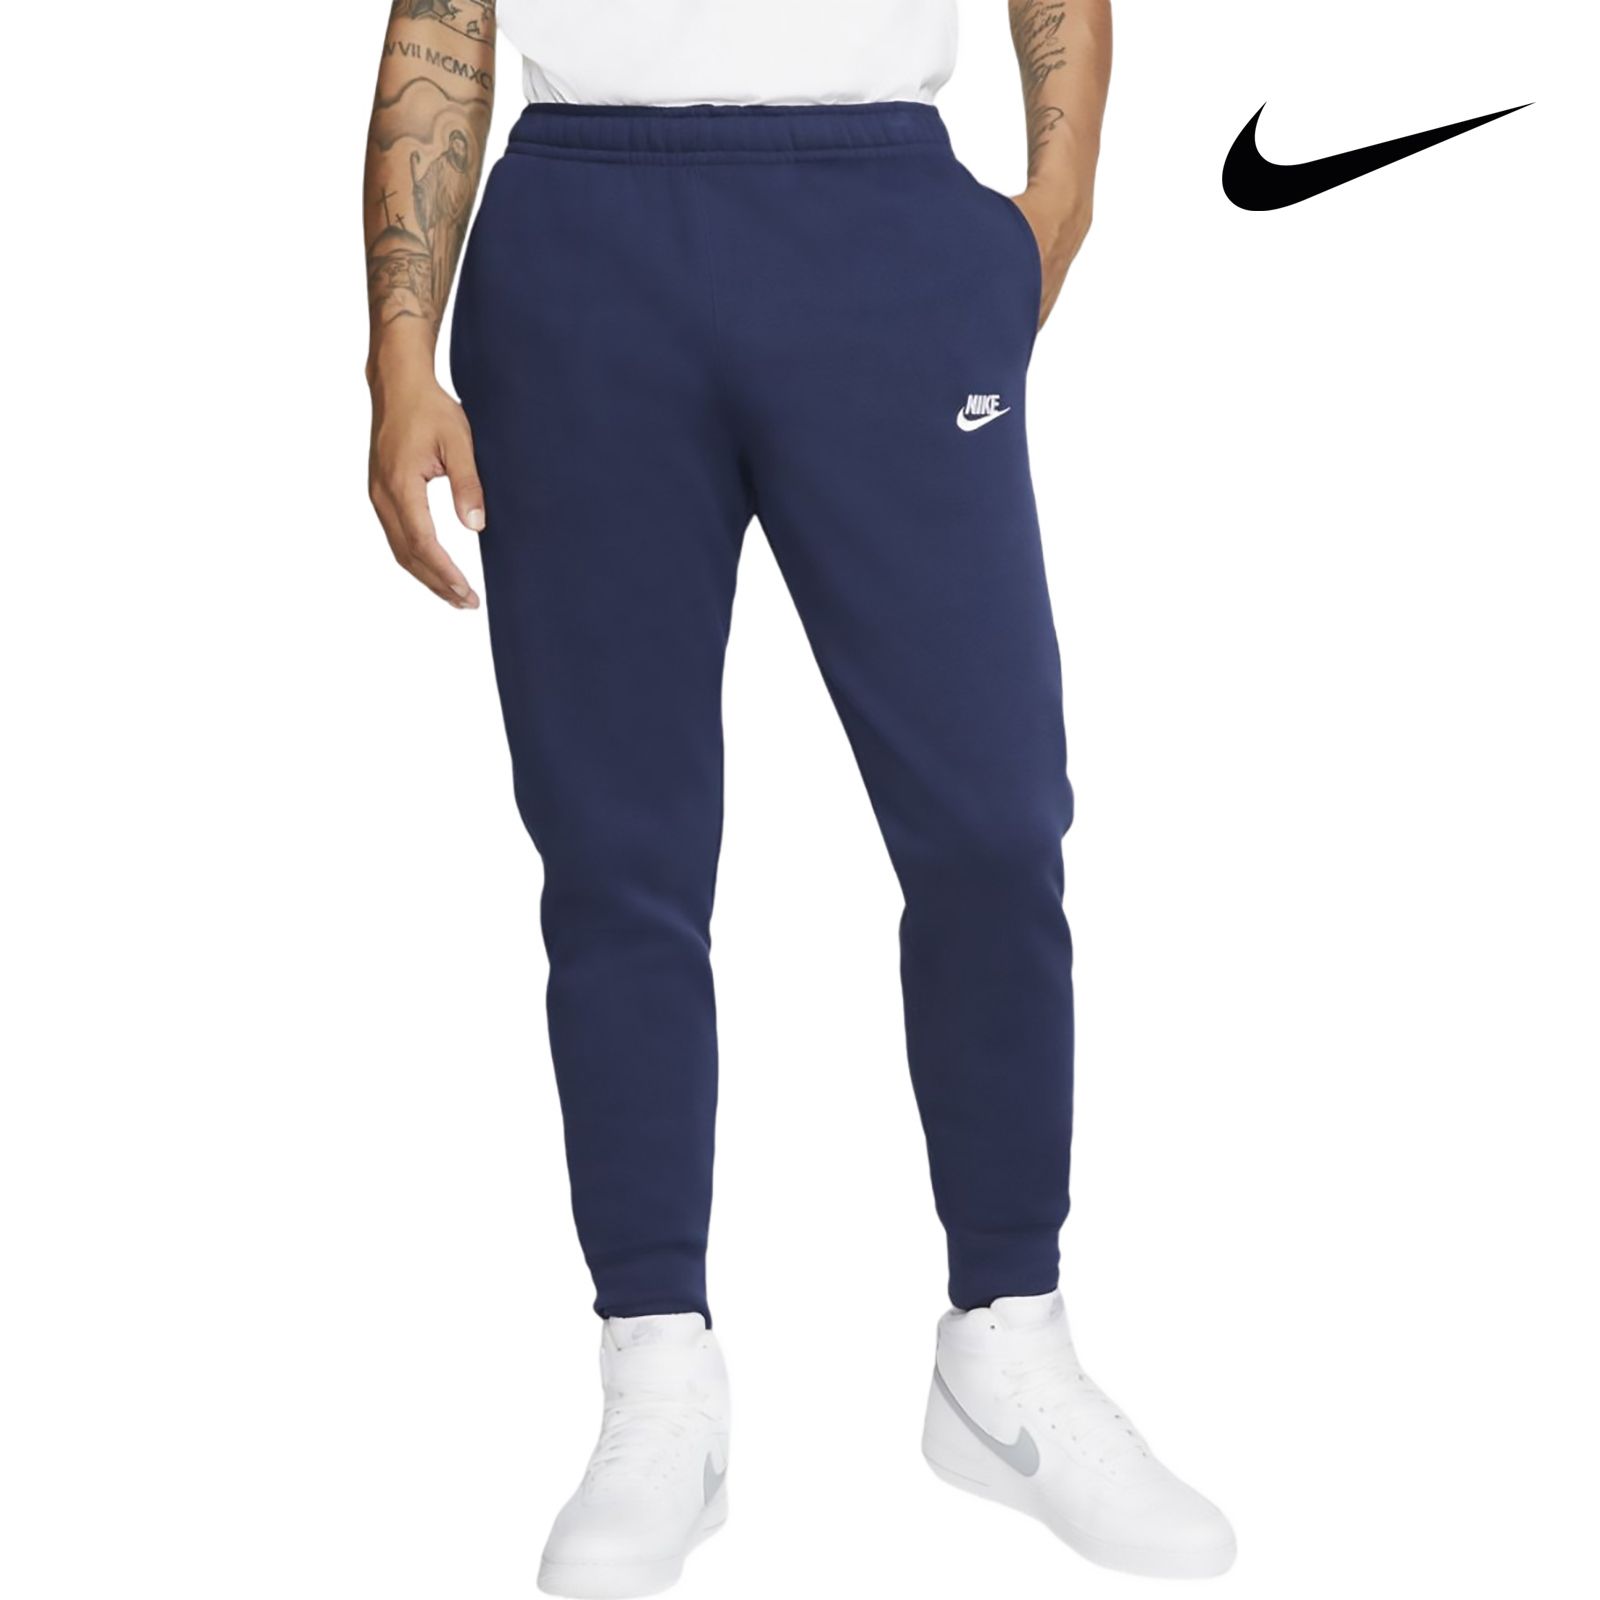 Брюки мужские Nike Sportswear Club. Брюки мужские Nike Sportswear Club Fleece. Bv2671-410 брюки Nike. Nike Jogger штаны.